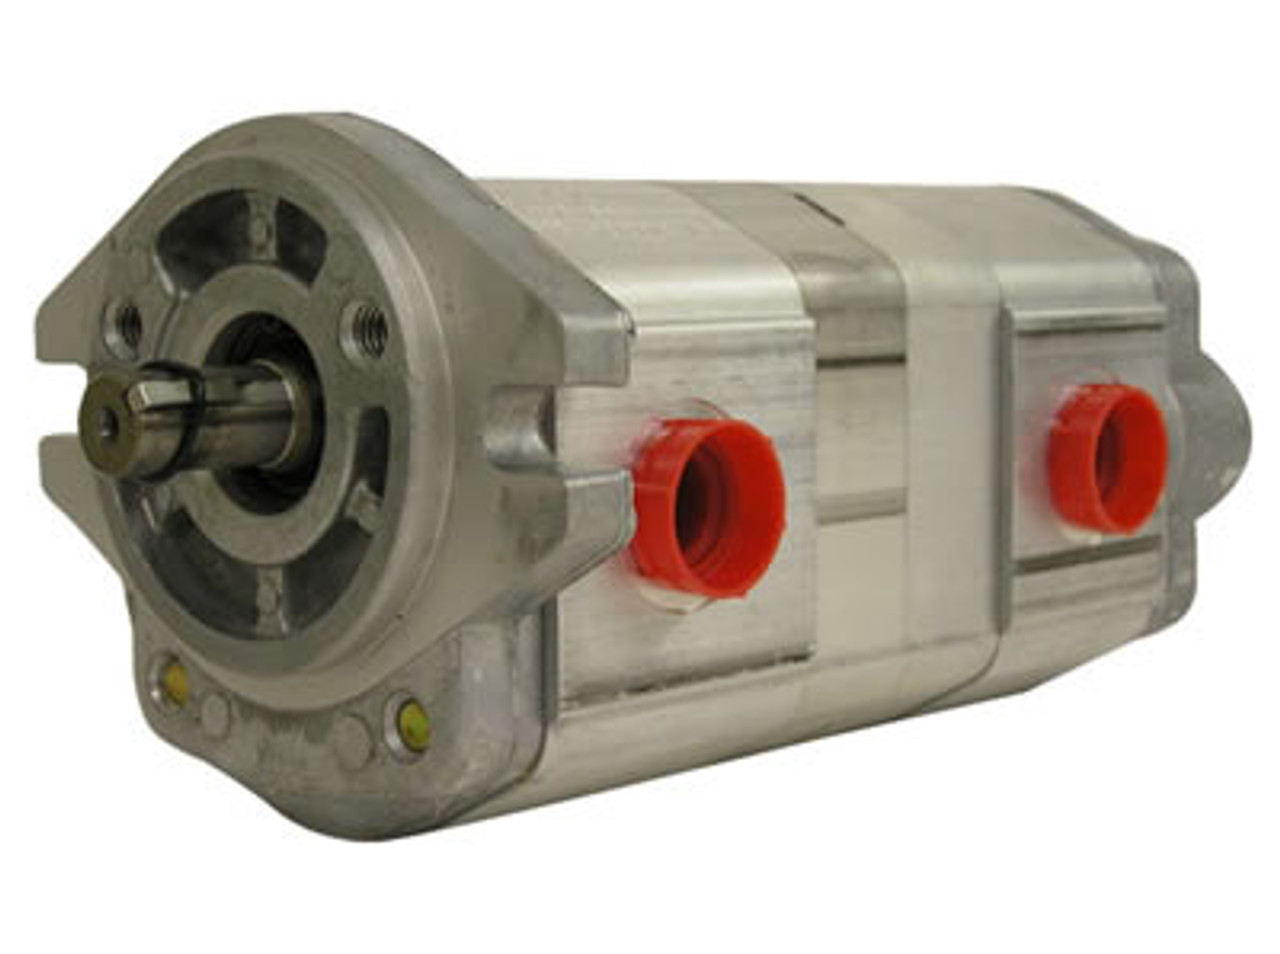 2DG1BU1105L Honor Pumps USA Tandem hydraulic gear pump 5.23 GPM/2.27 GPM @ 1800 RPM  Honor Pumps USA